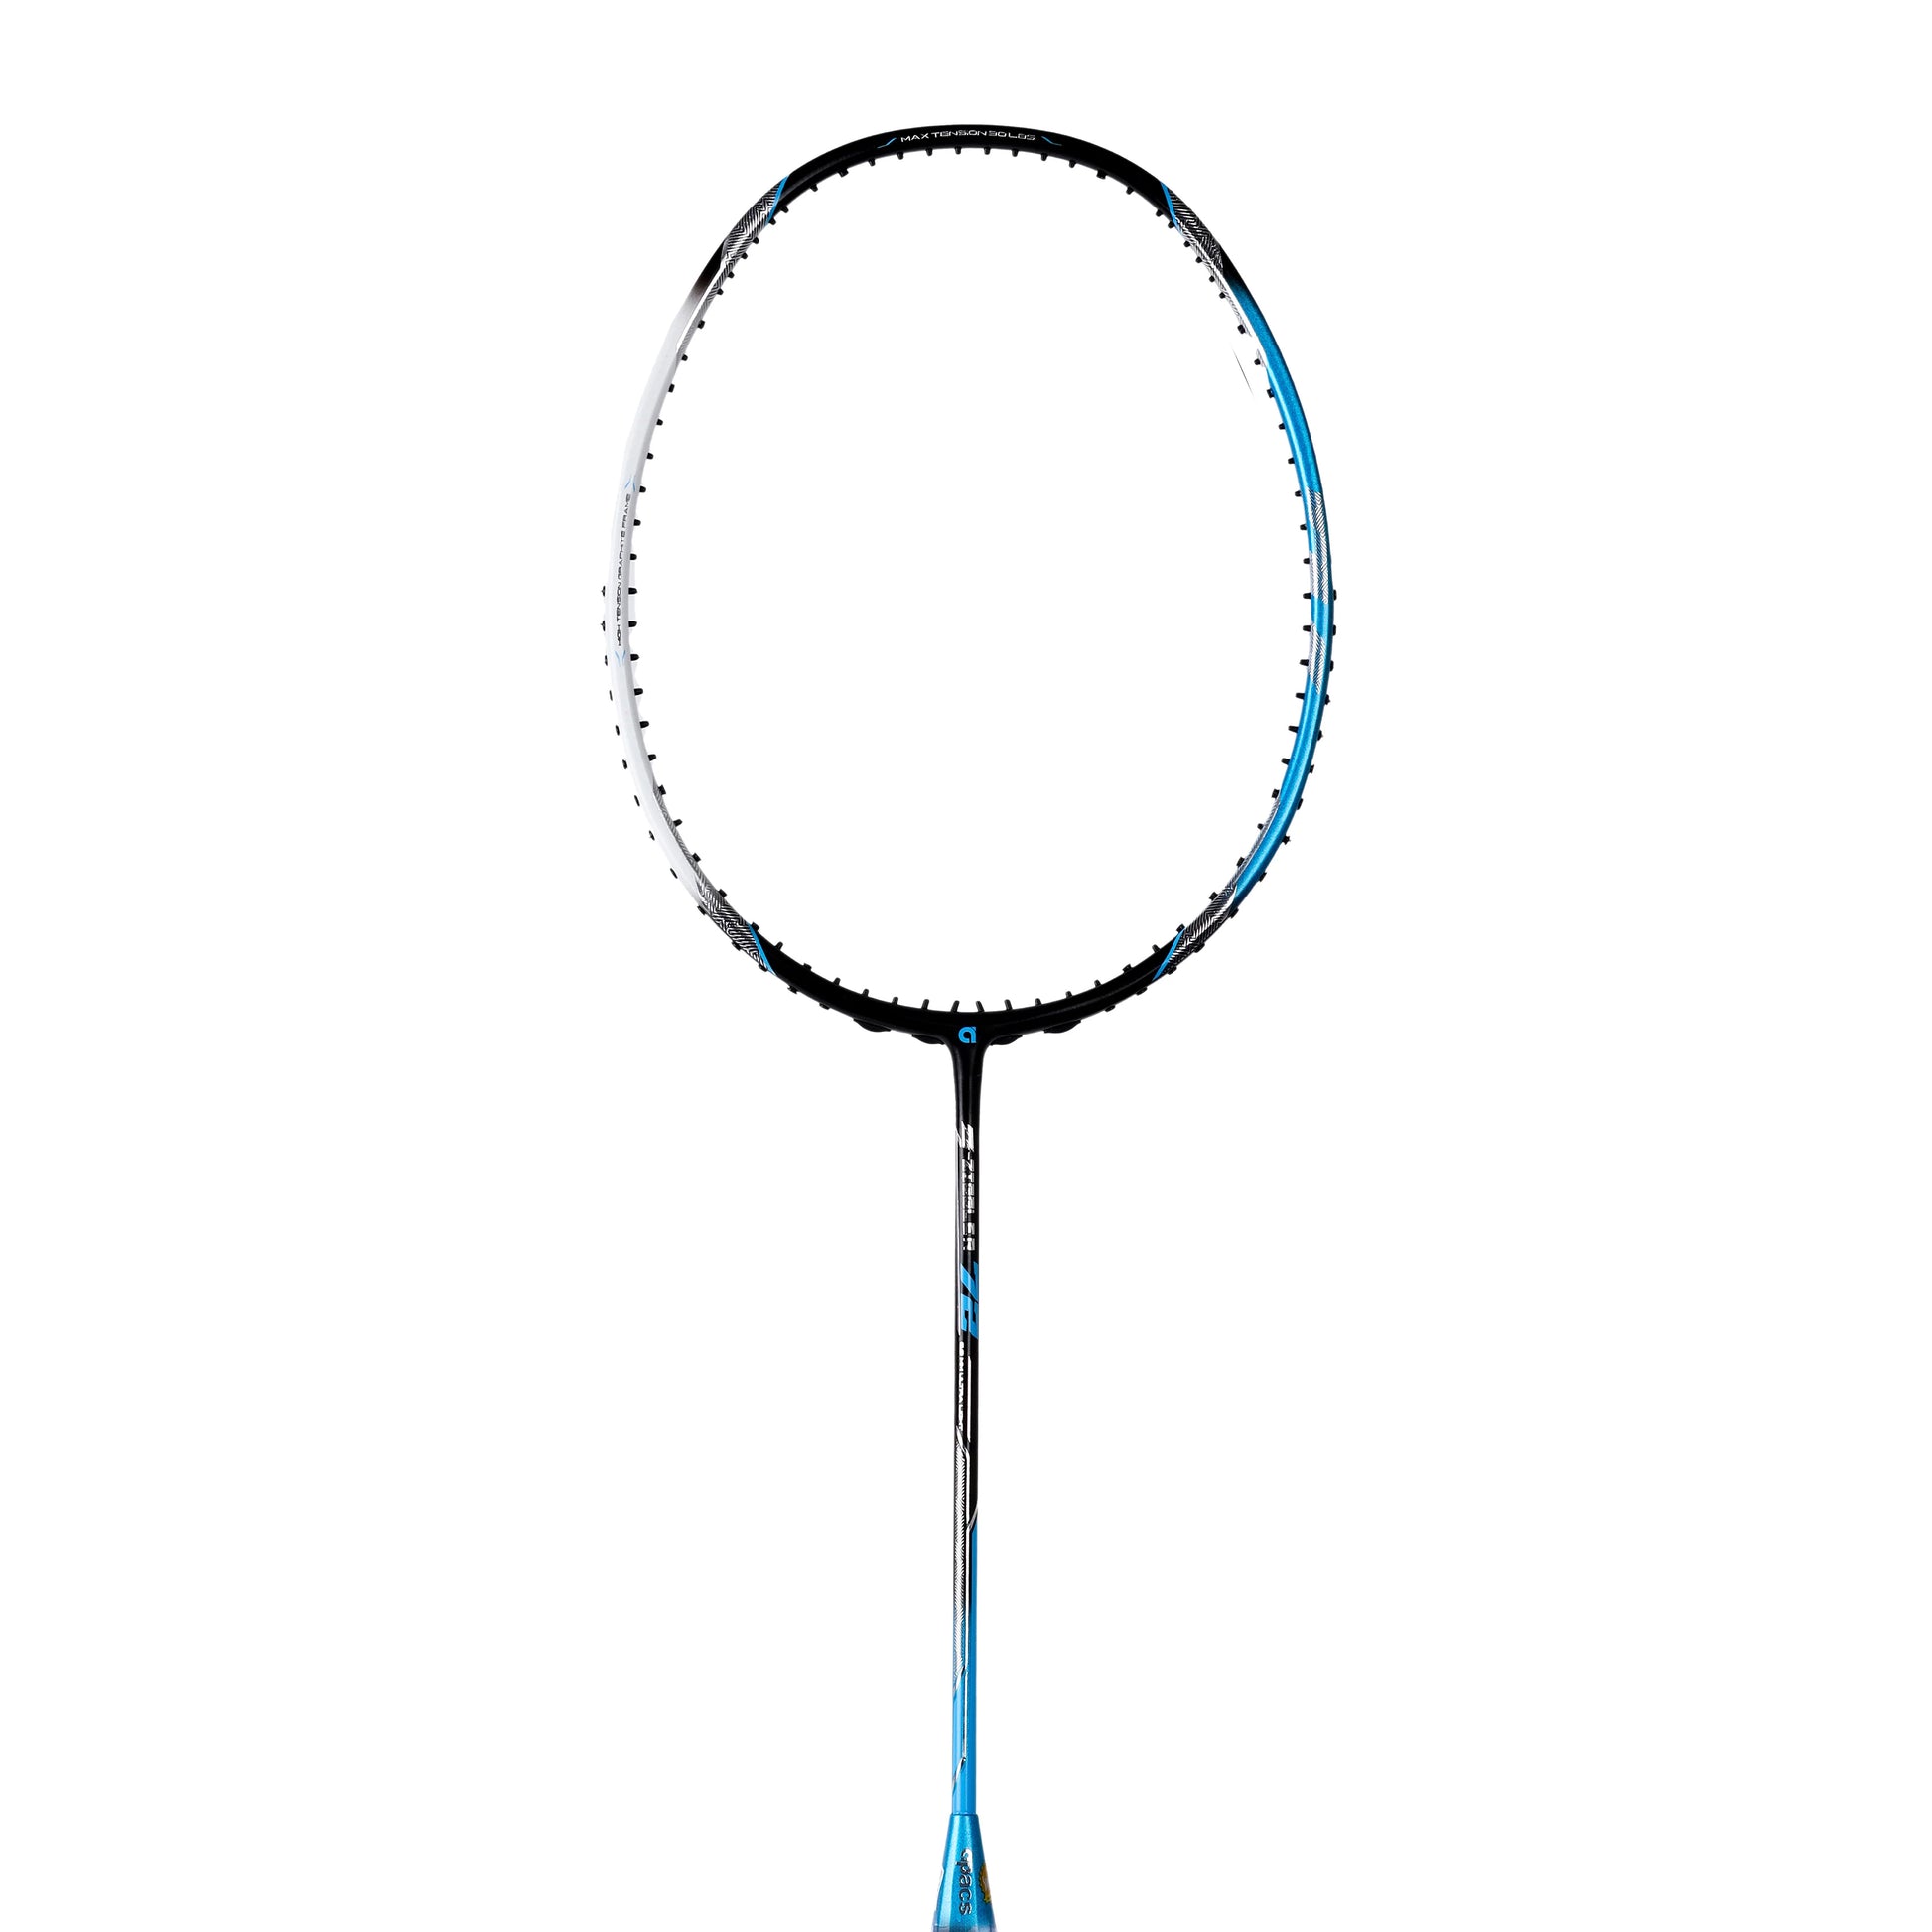 Apacs Z-Ziggler 72 Badminton Racquet without Cover - Best Price online Prokicksports.com